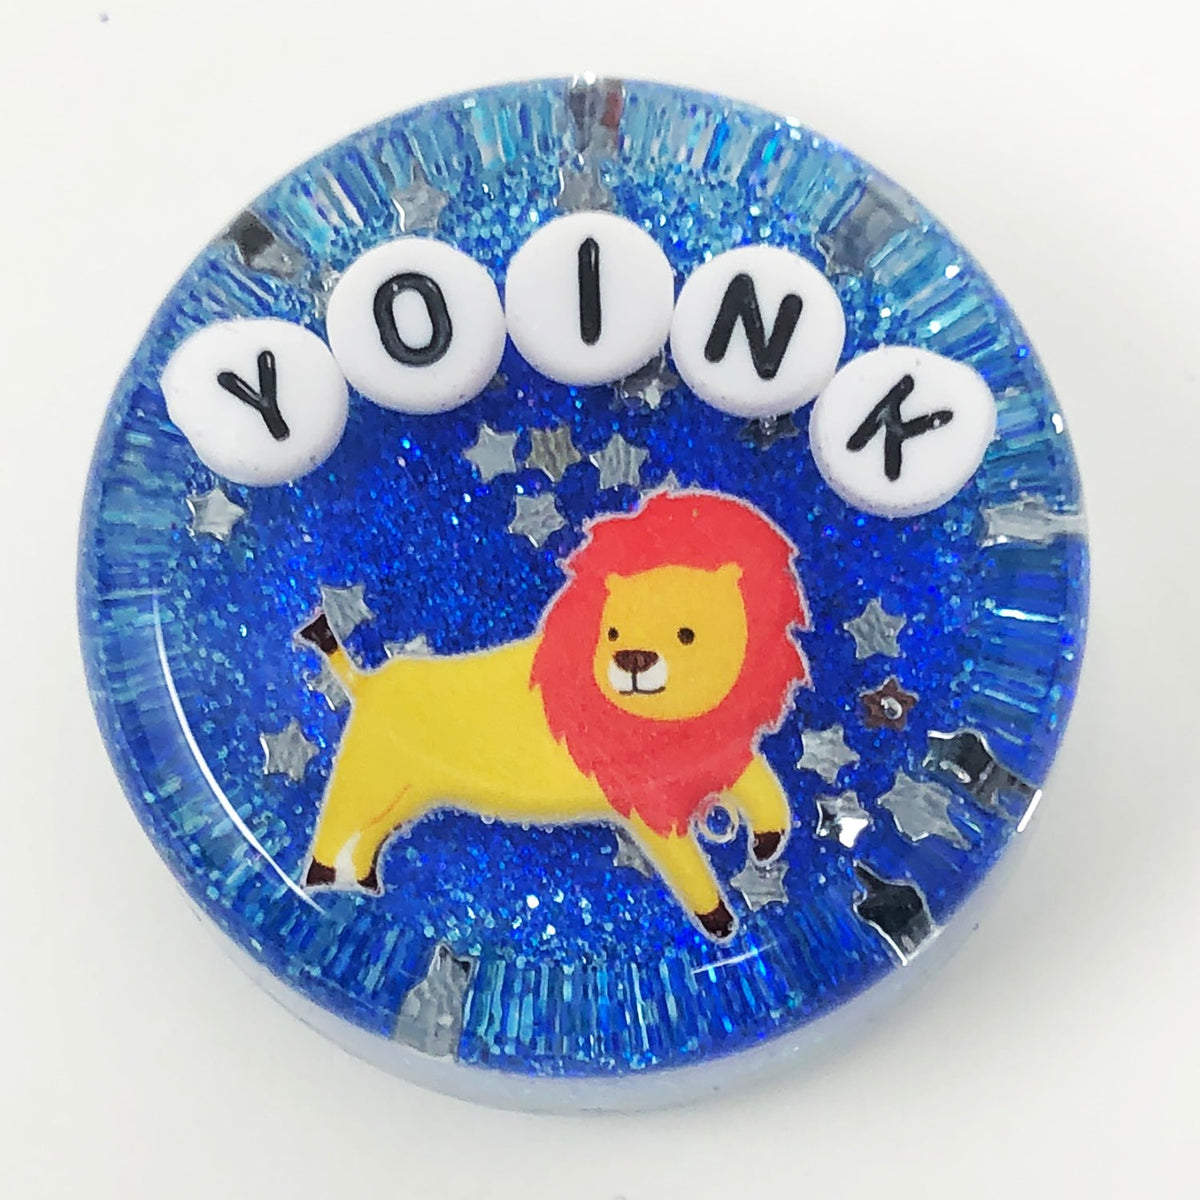 Yoink - Shower Art - READY TO SHIP